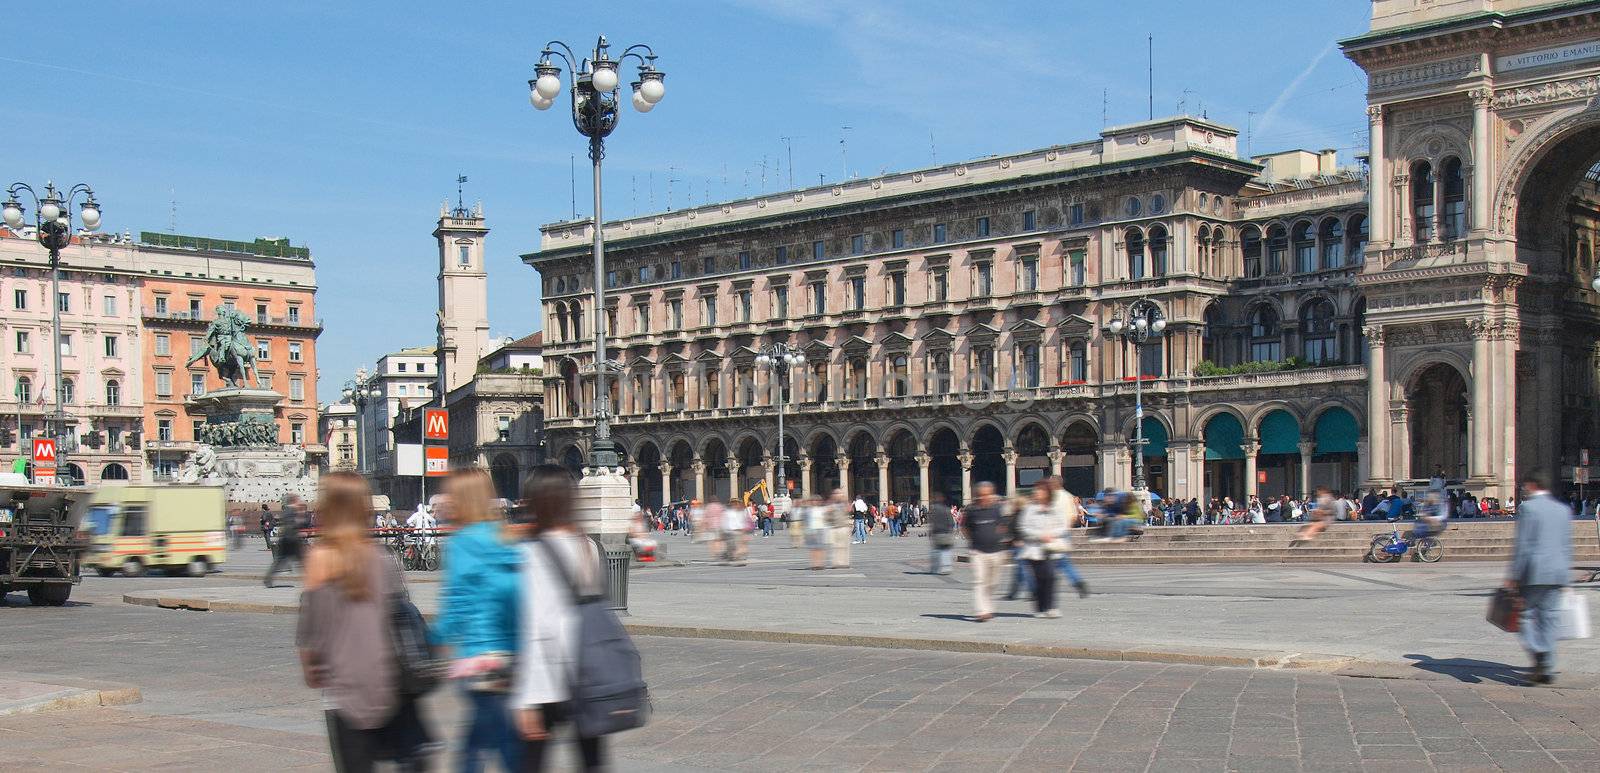 Piazza Duomo, Milan by claudiodivizia